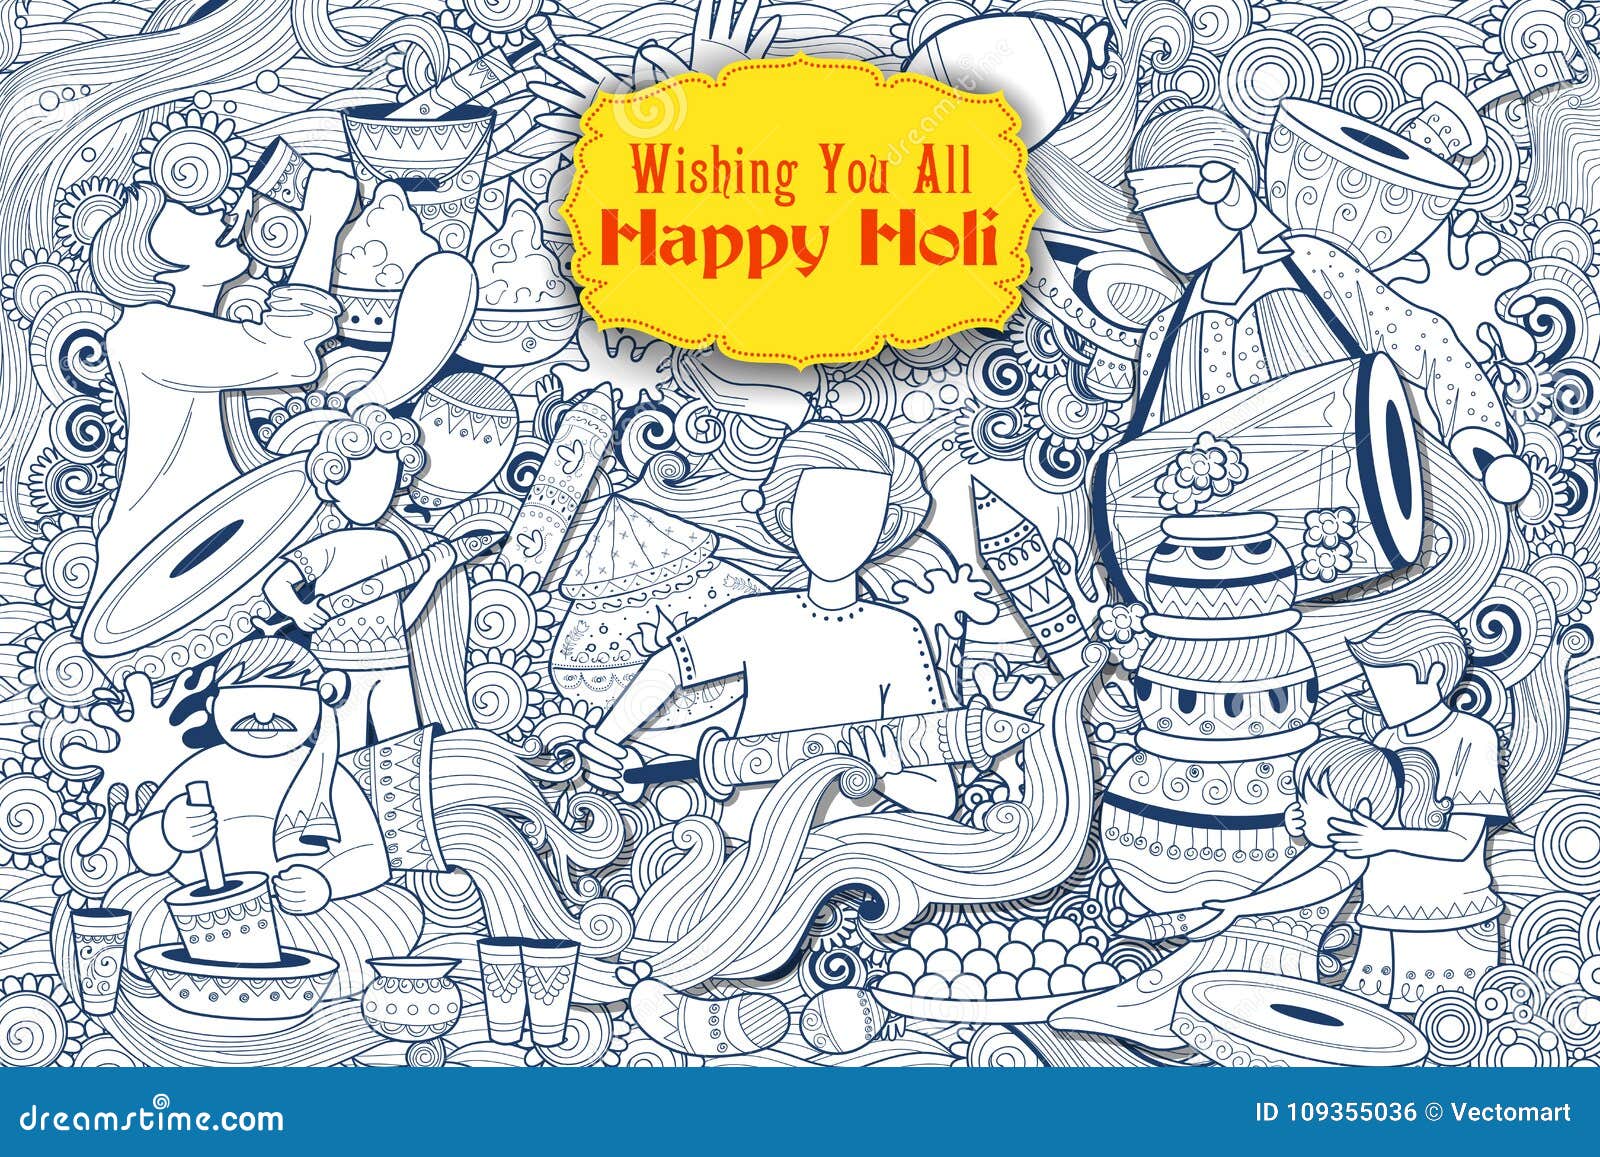 Holi drawing easy | How to draw holi festival picture simple | Holi drawing,  Holi festival, Easy drawings